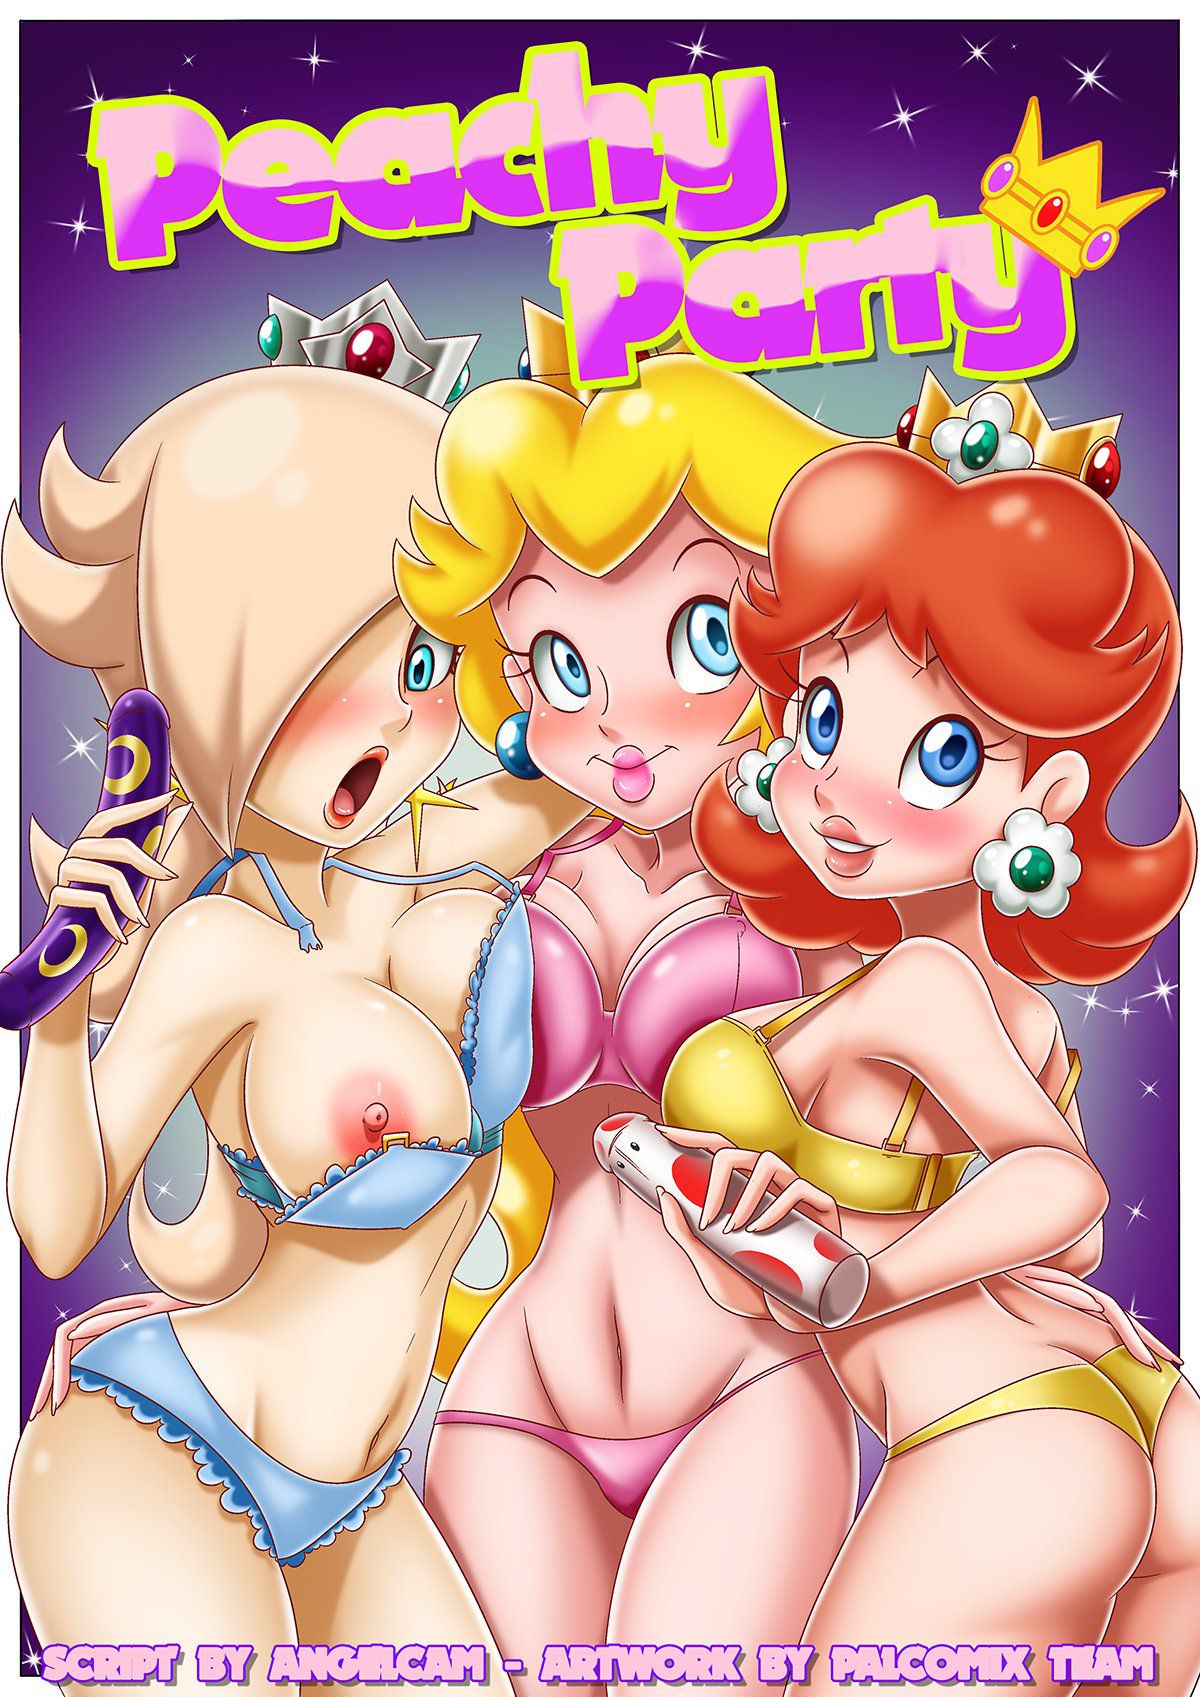 Peachy Party (Mario Series) [Palcomix] - 1 . Peachy Party - Chapter 1  (Mario Series) [Palcomix] - AllPornComic